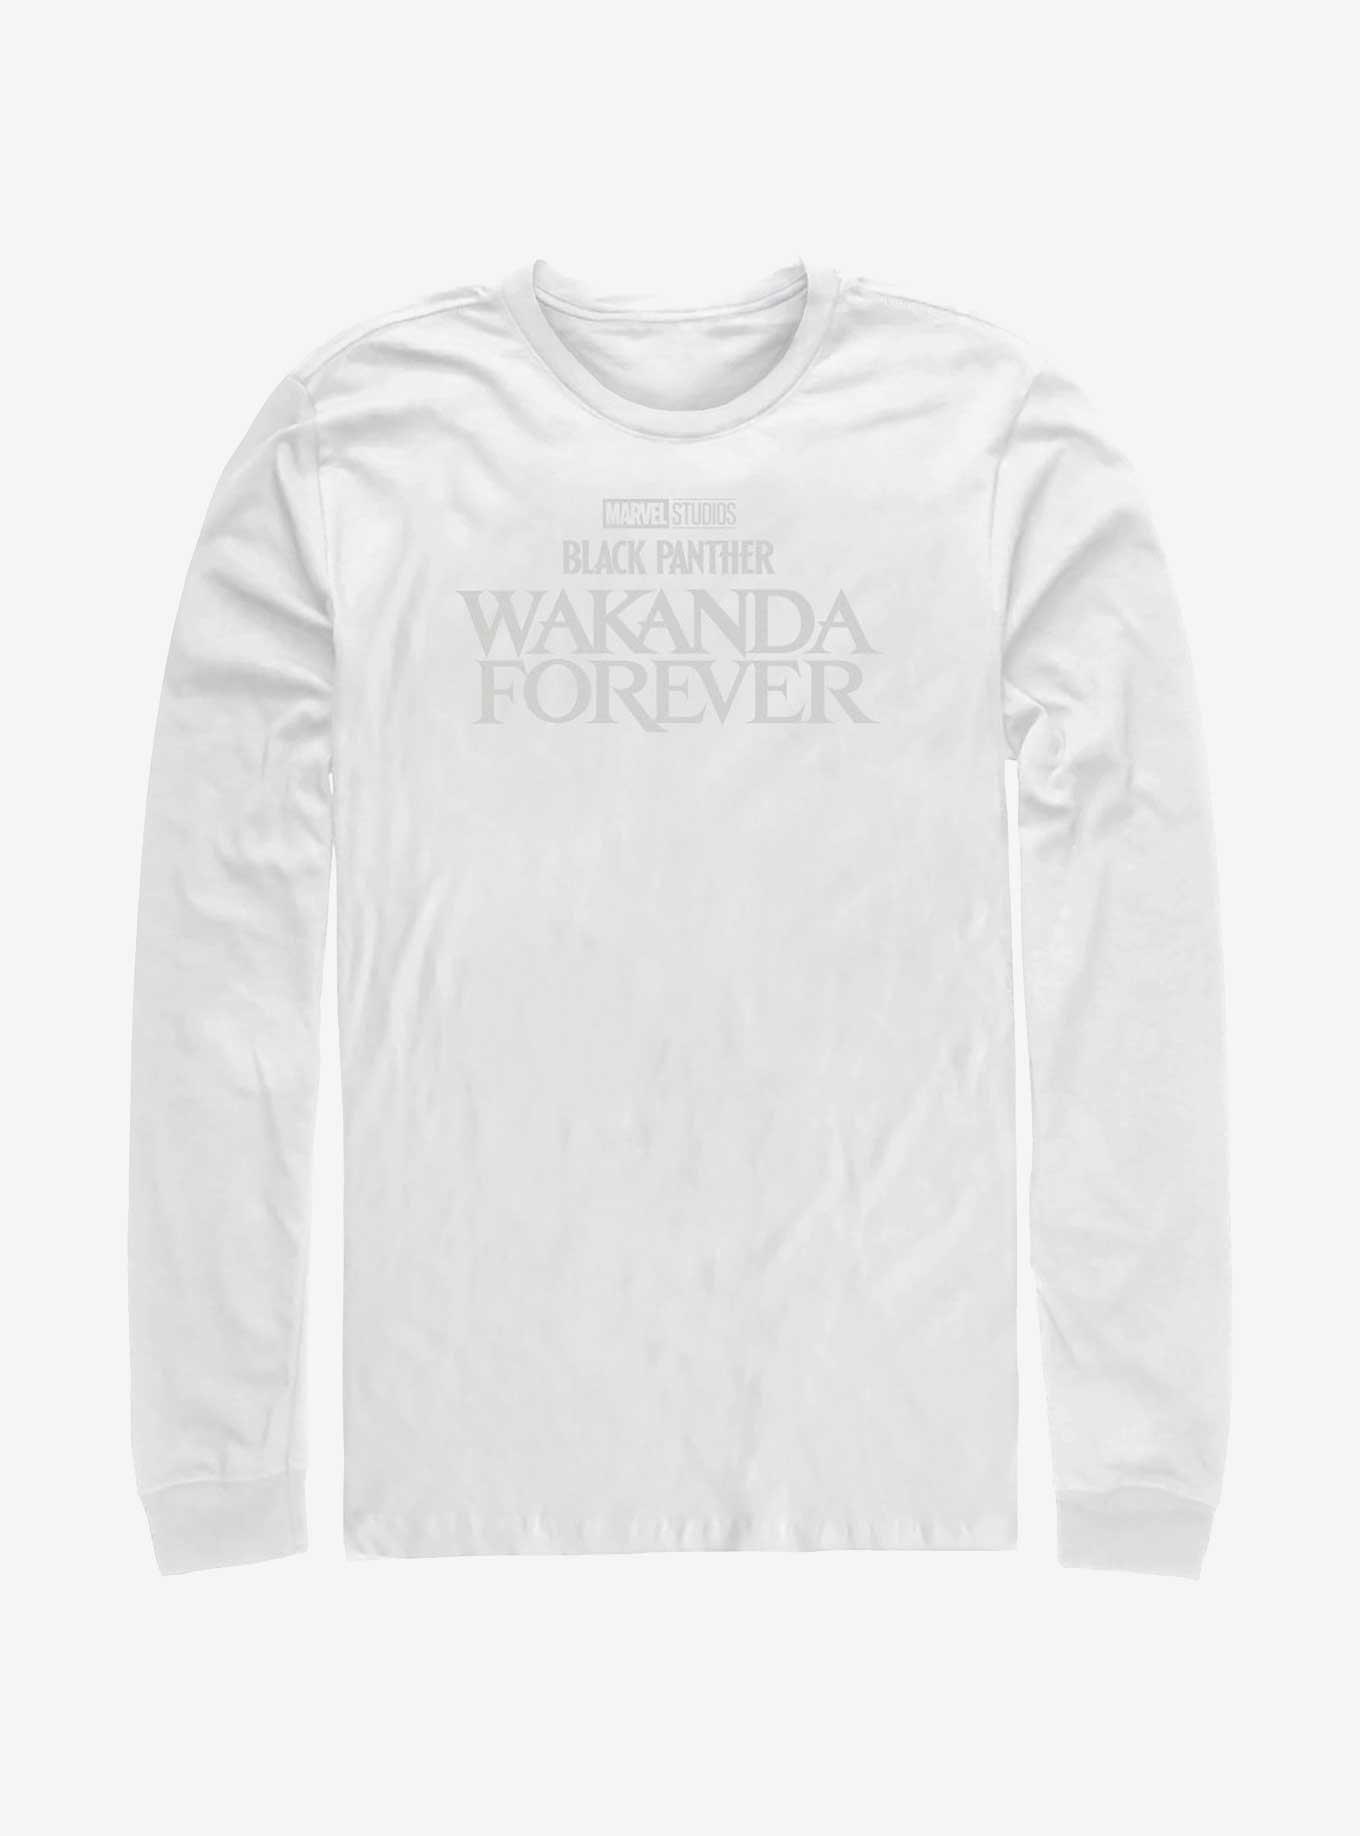 Marvel Black Panther: Wakanda Forever Logo Long-Sleeve T-Shirt, WHITE, hi-res